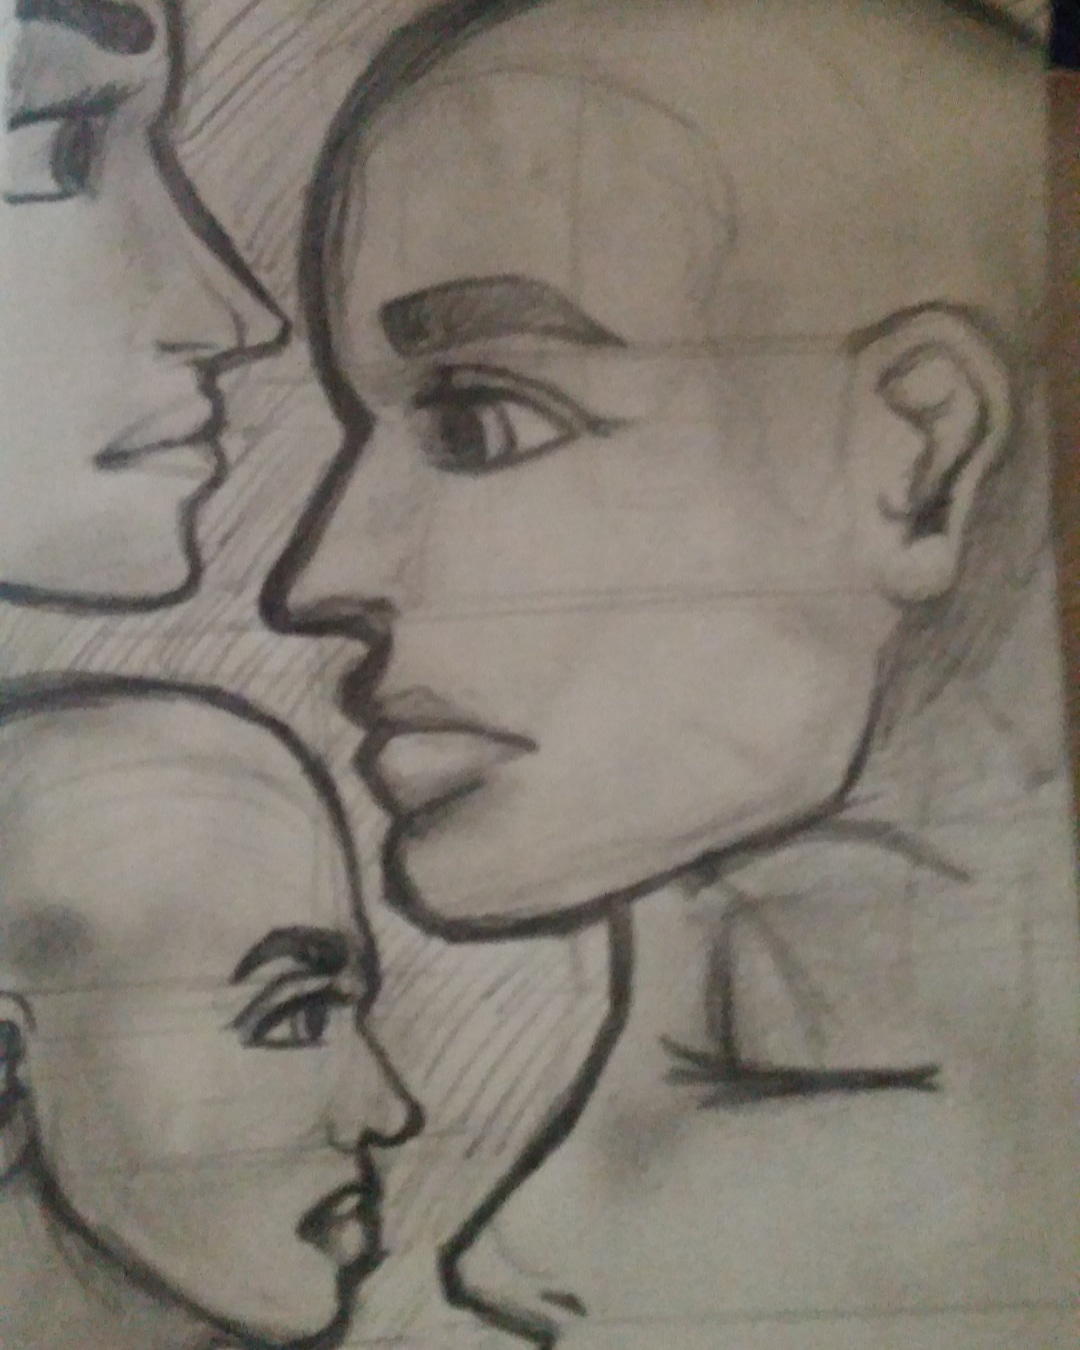 Heads in Profile pencil sketch